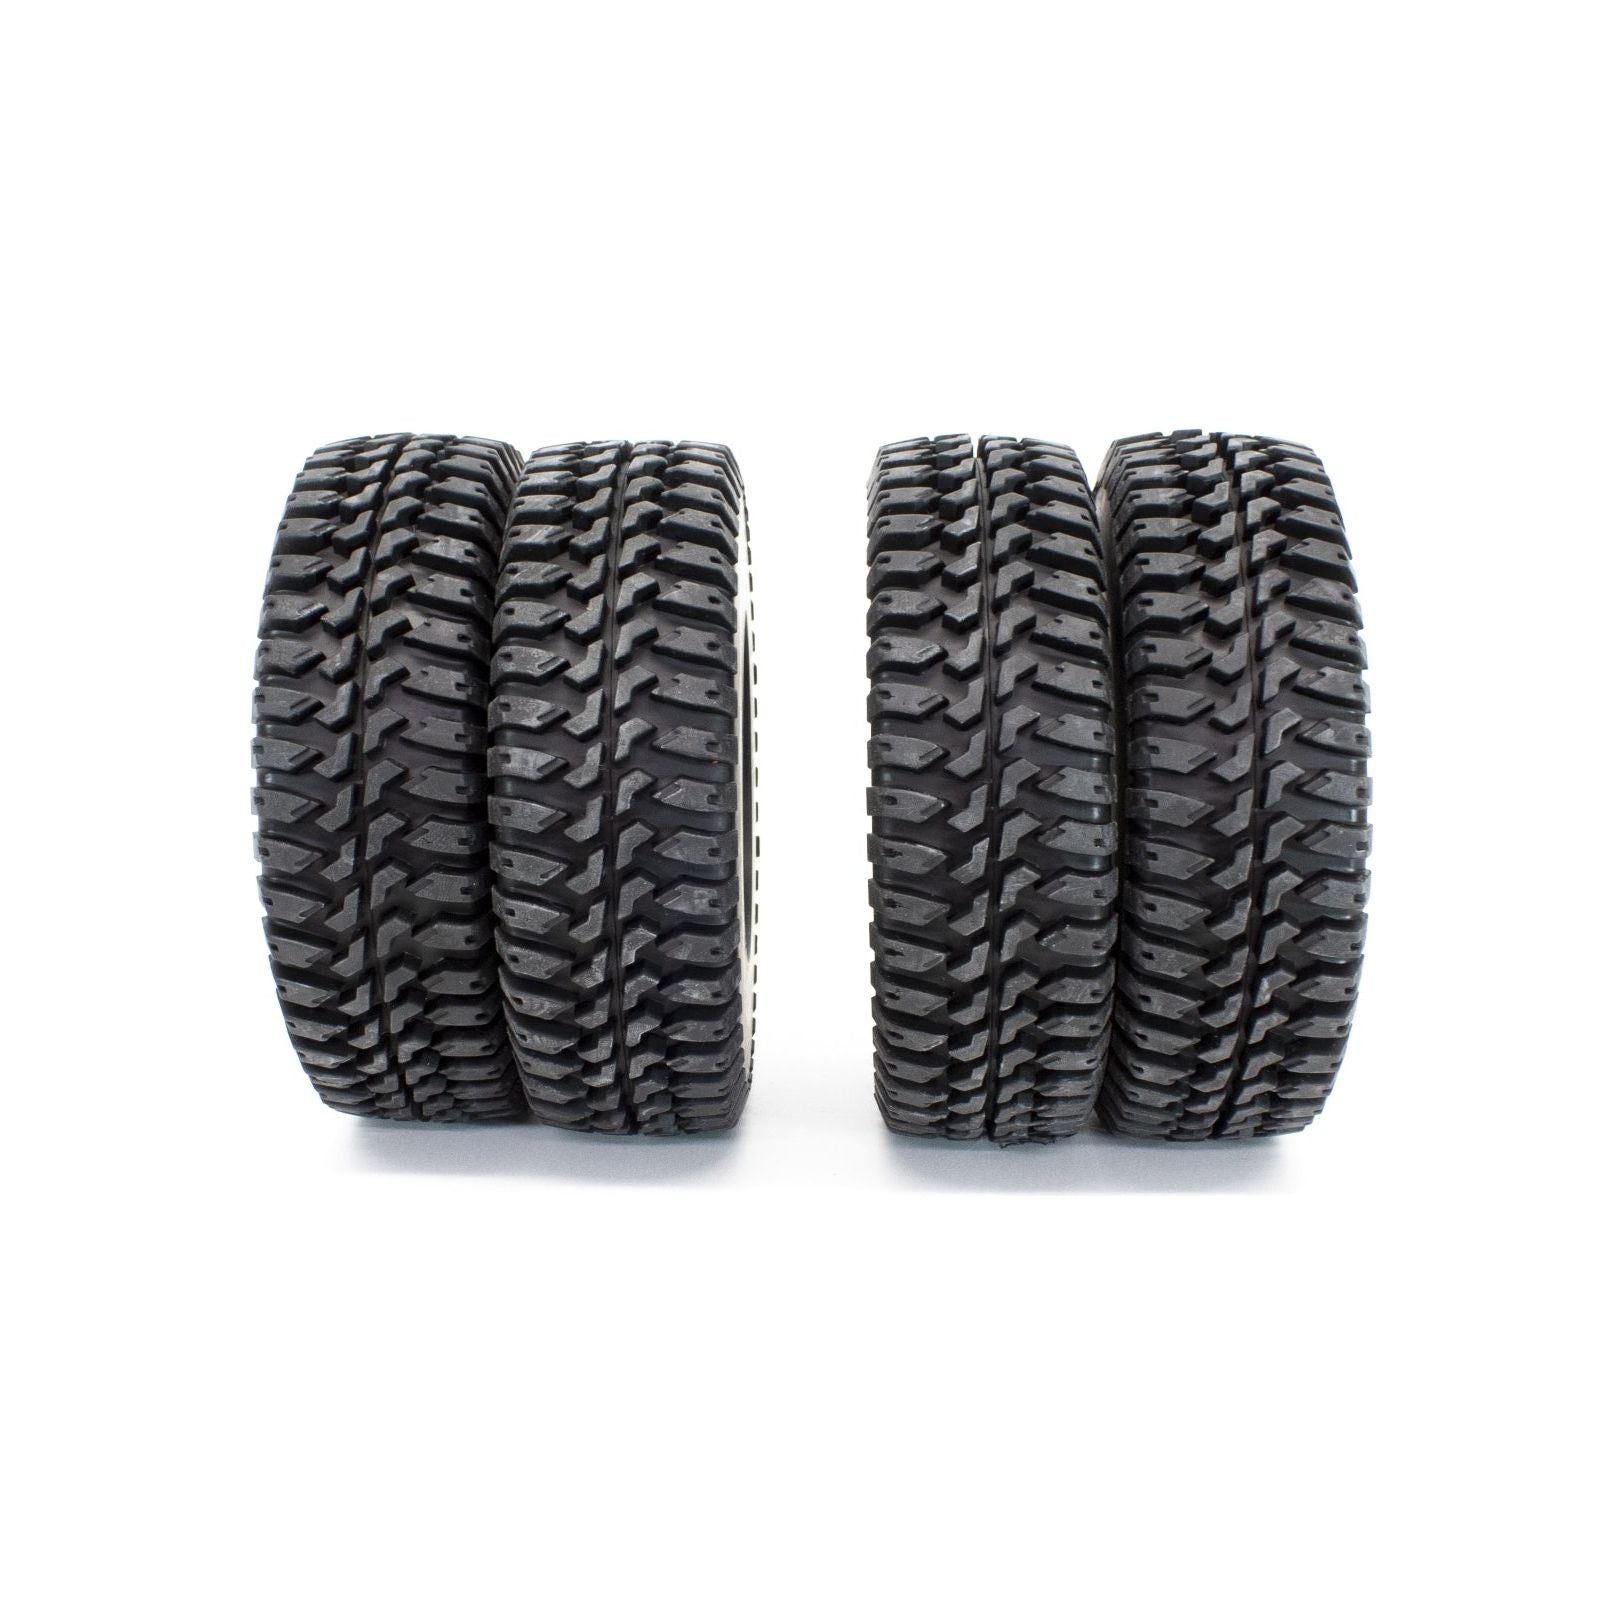 IMEX 3.2 Dually Tires (1 Pair)